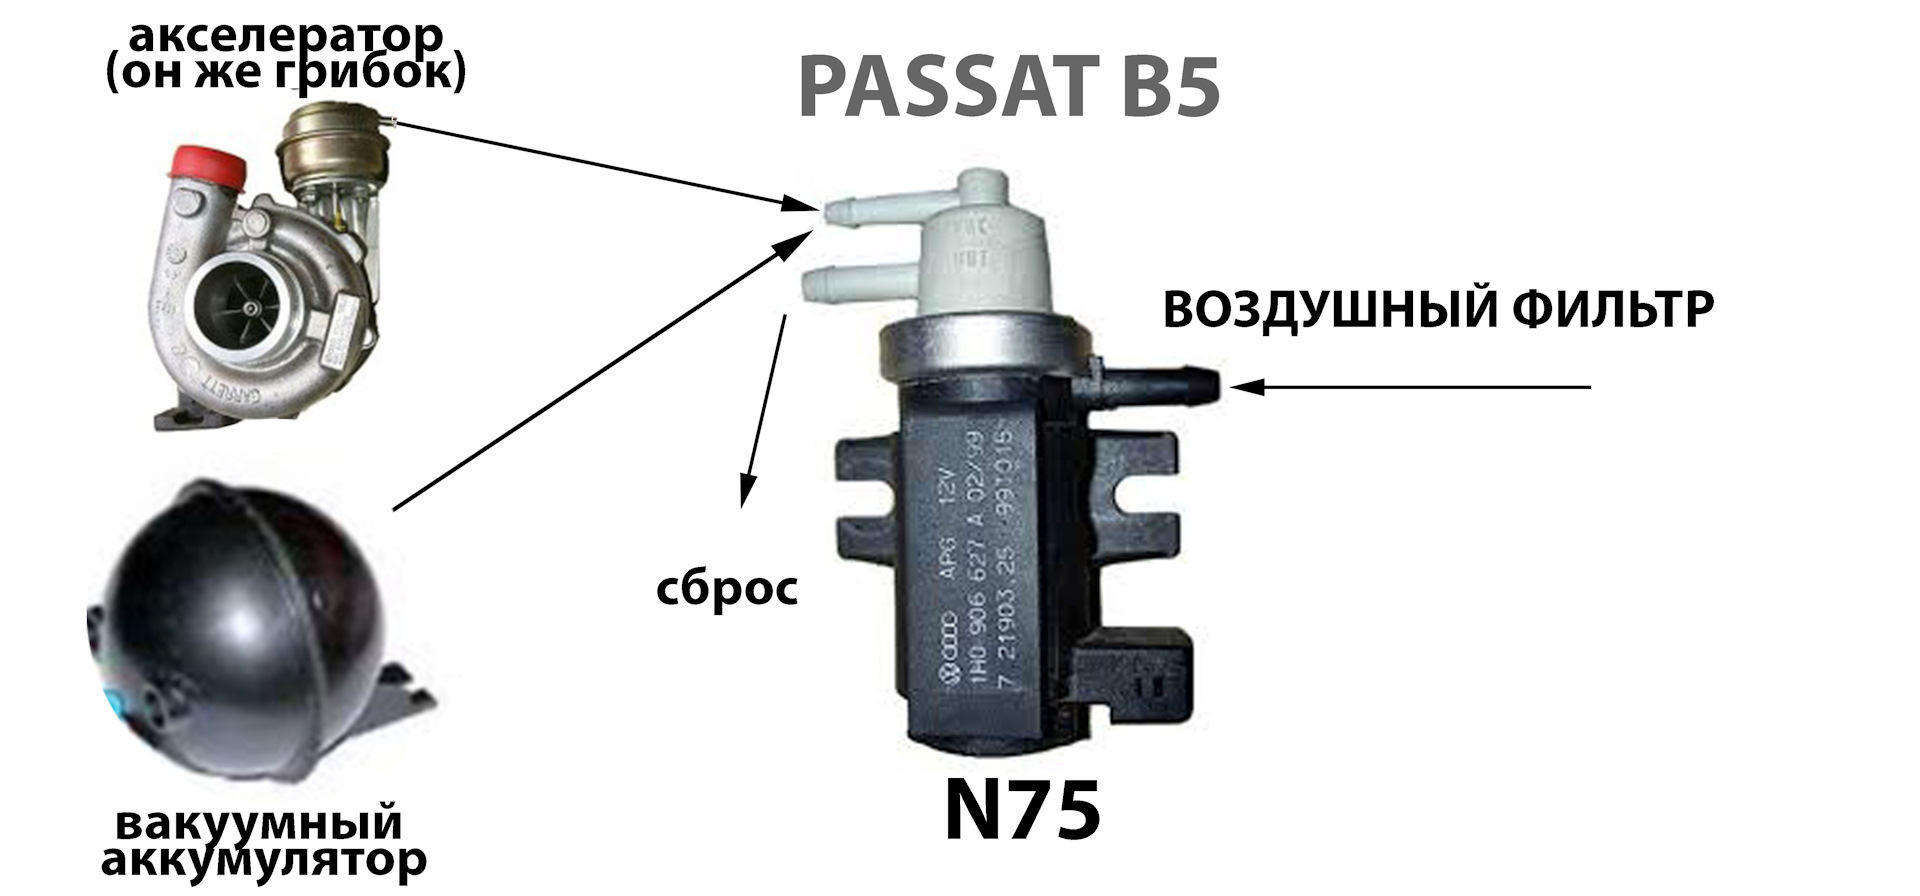 Чистка клапана н75 фольксваген пассат